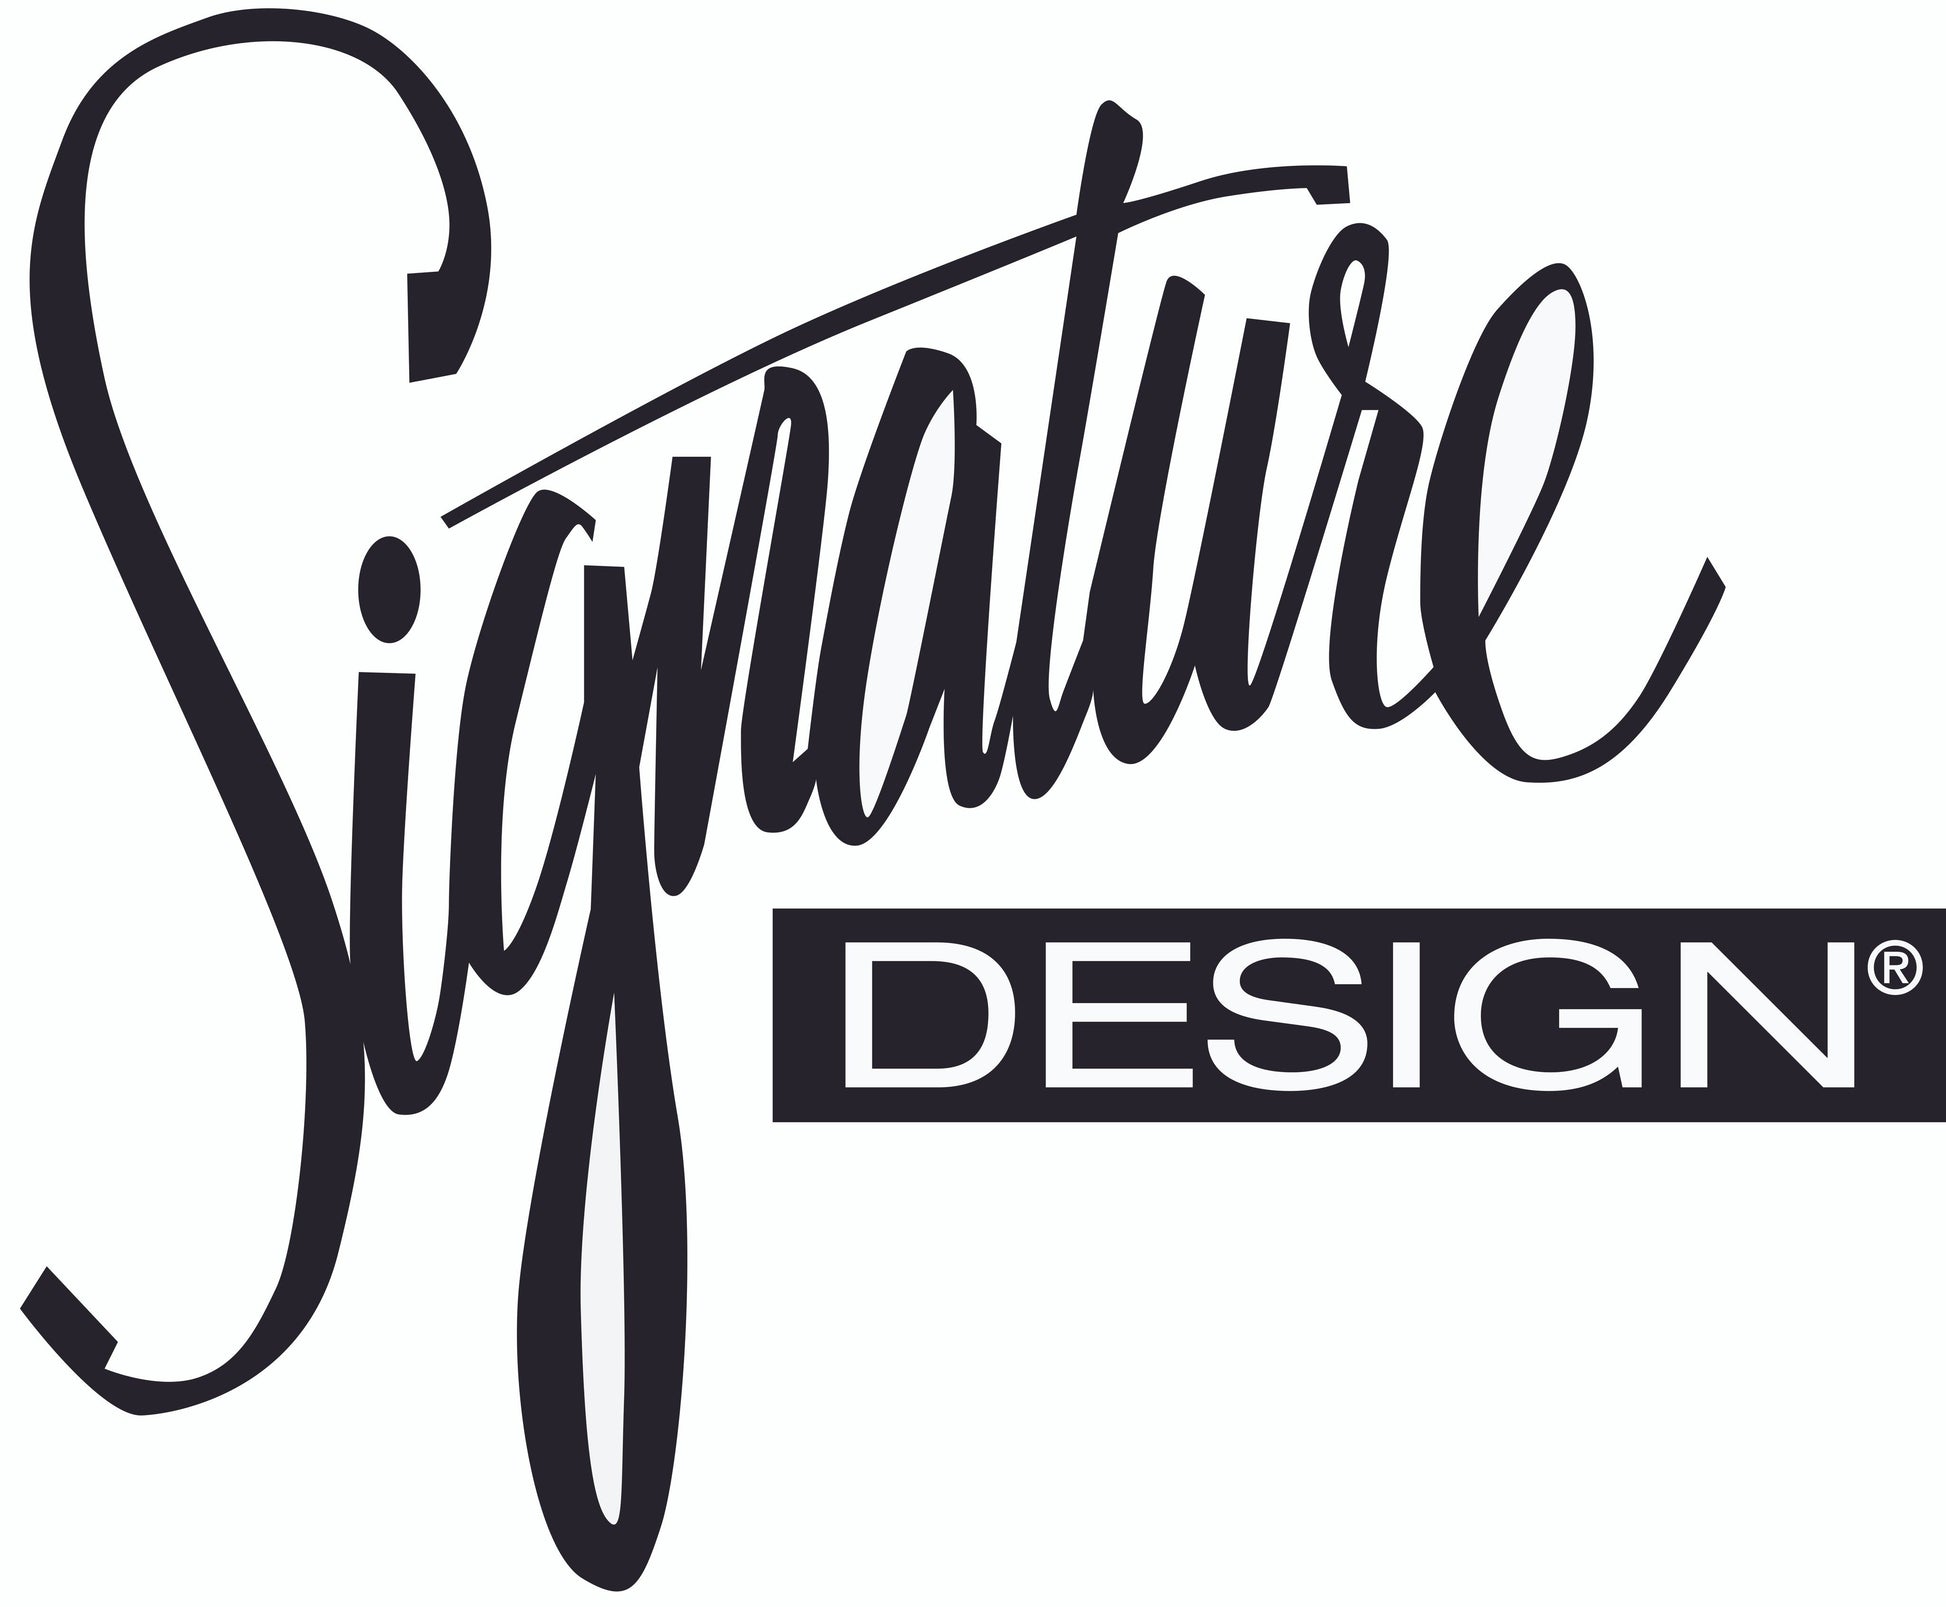 Lexorne  Sleigh Bed Signature Design by Ashley®